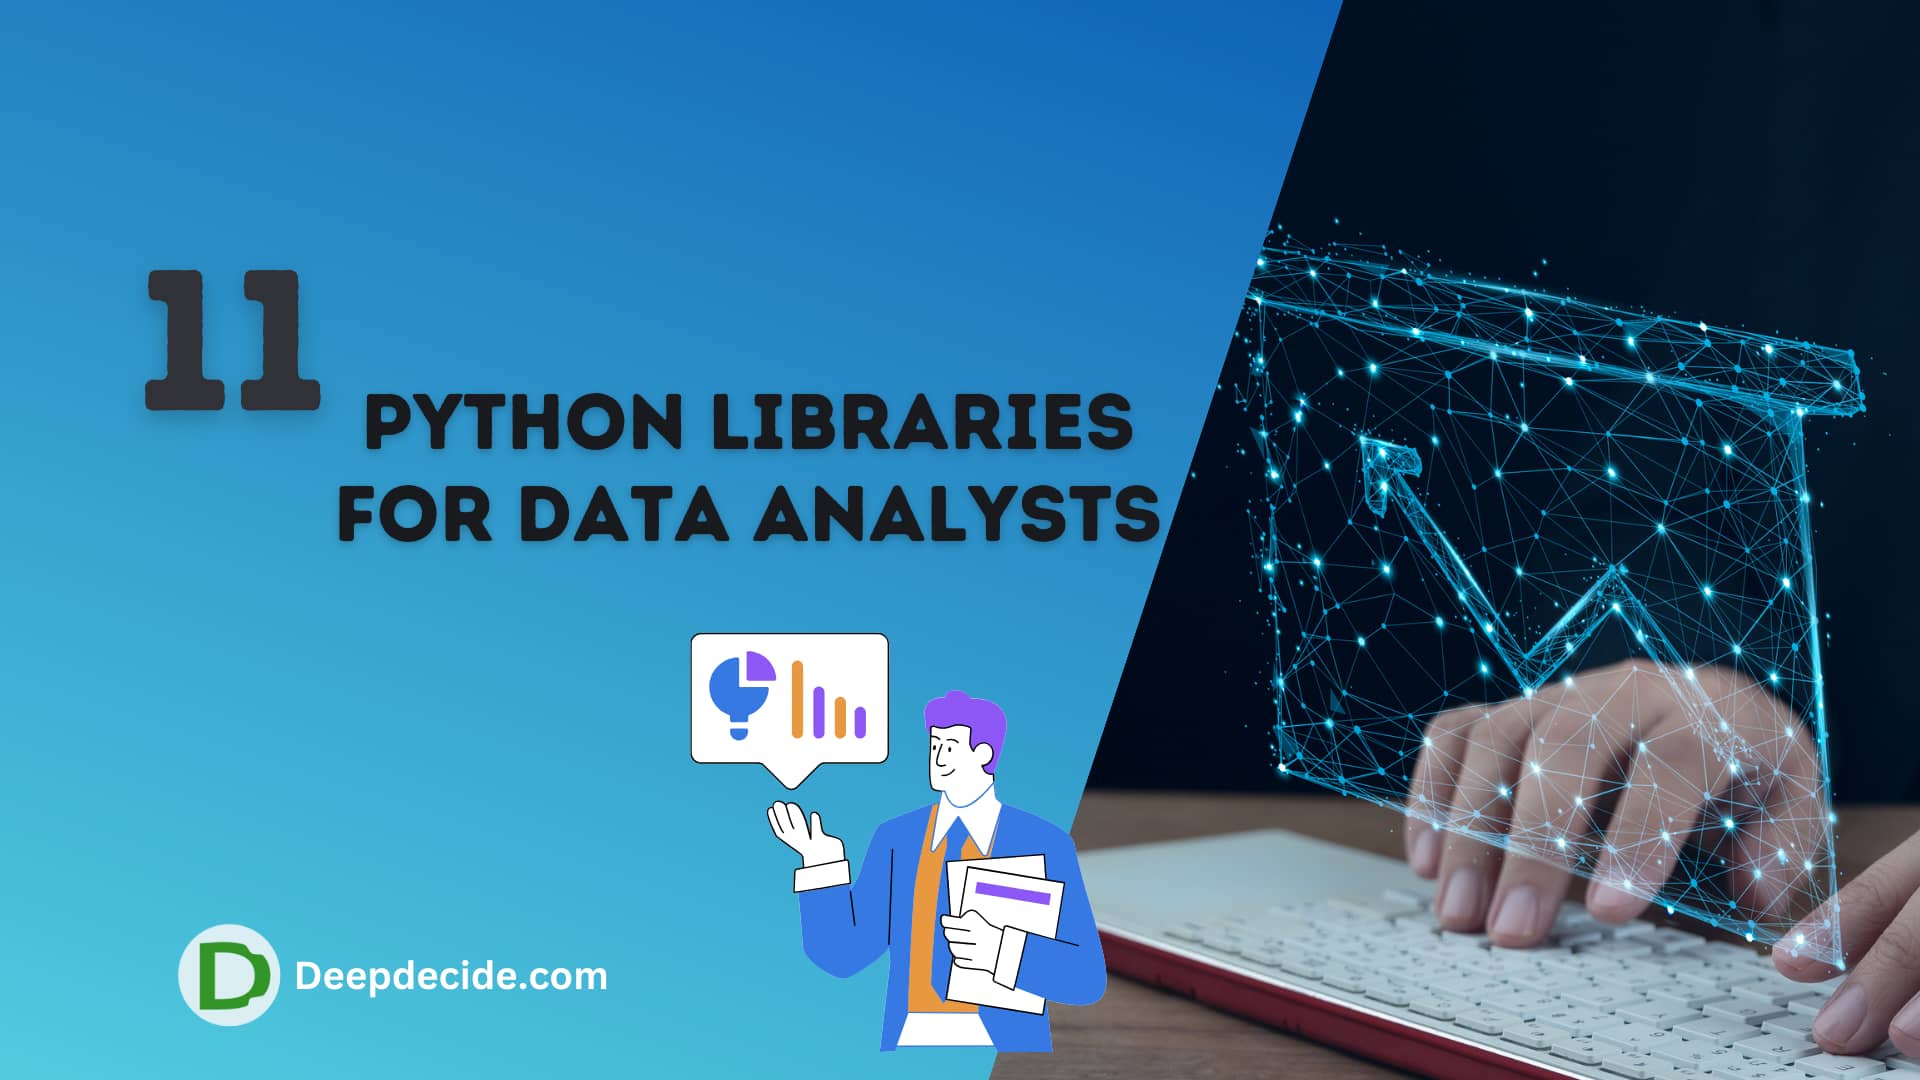 11 Python Libraries For Data Analysis & Analytics & Data Analysts